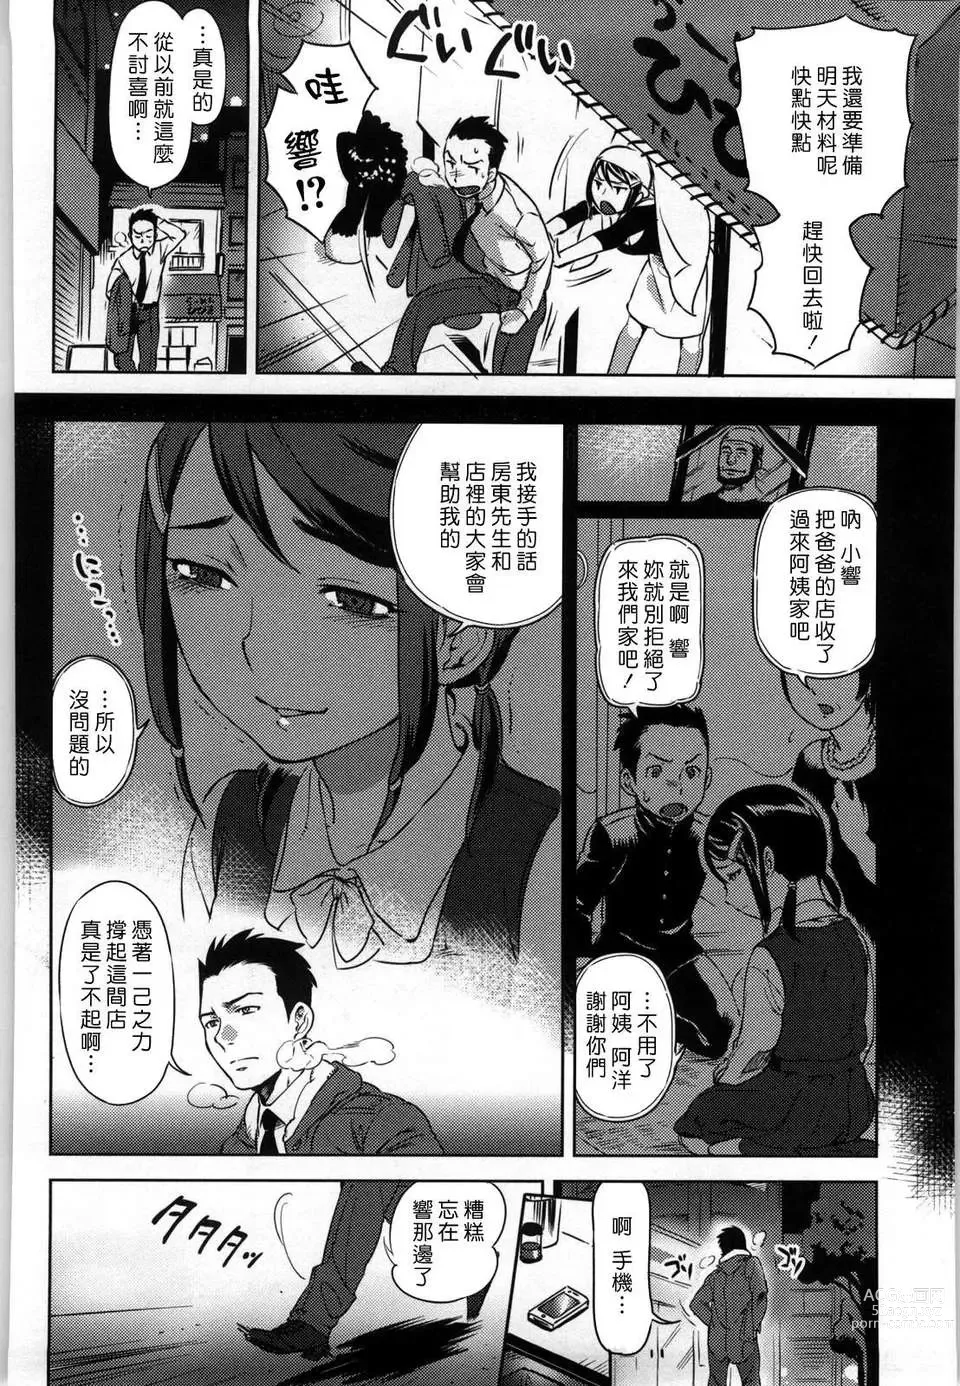 Page 198 of manga Koibito Rule